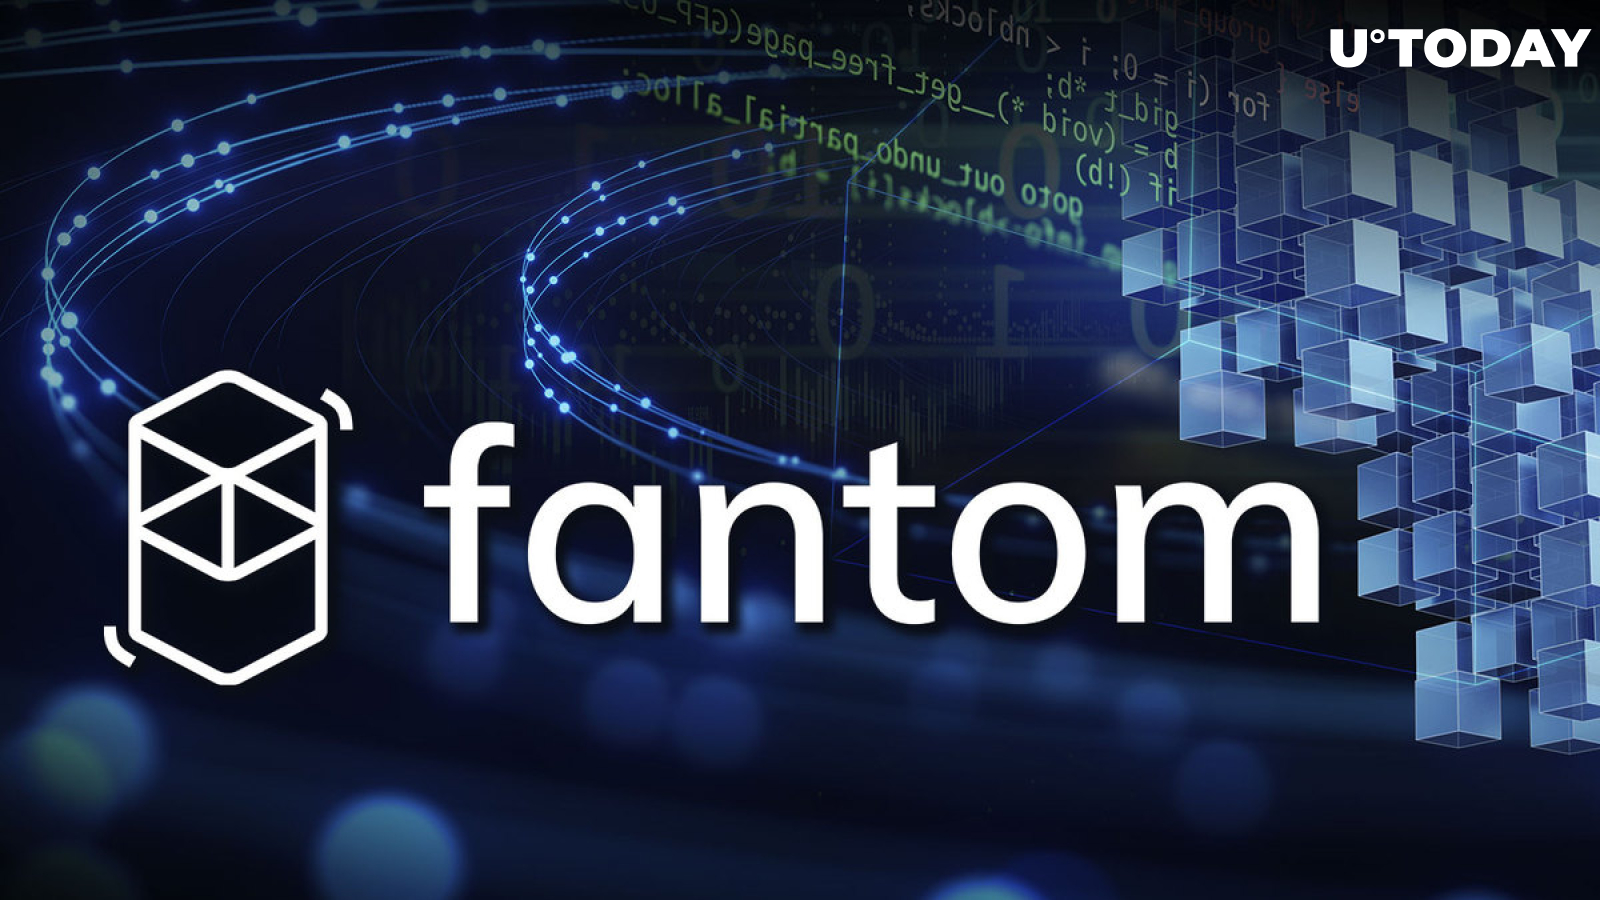 Fantom Took Precautionary Measures to Contain Multichain Implosion: Details